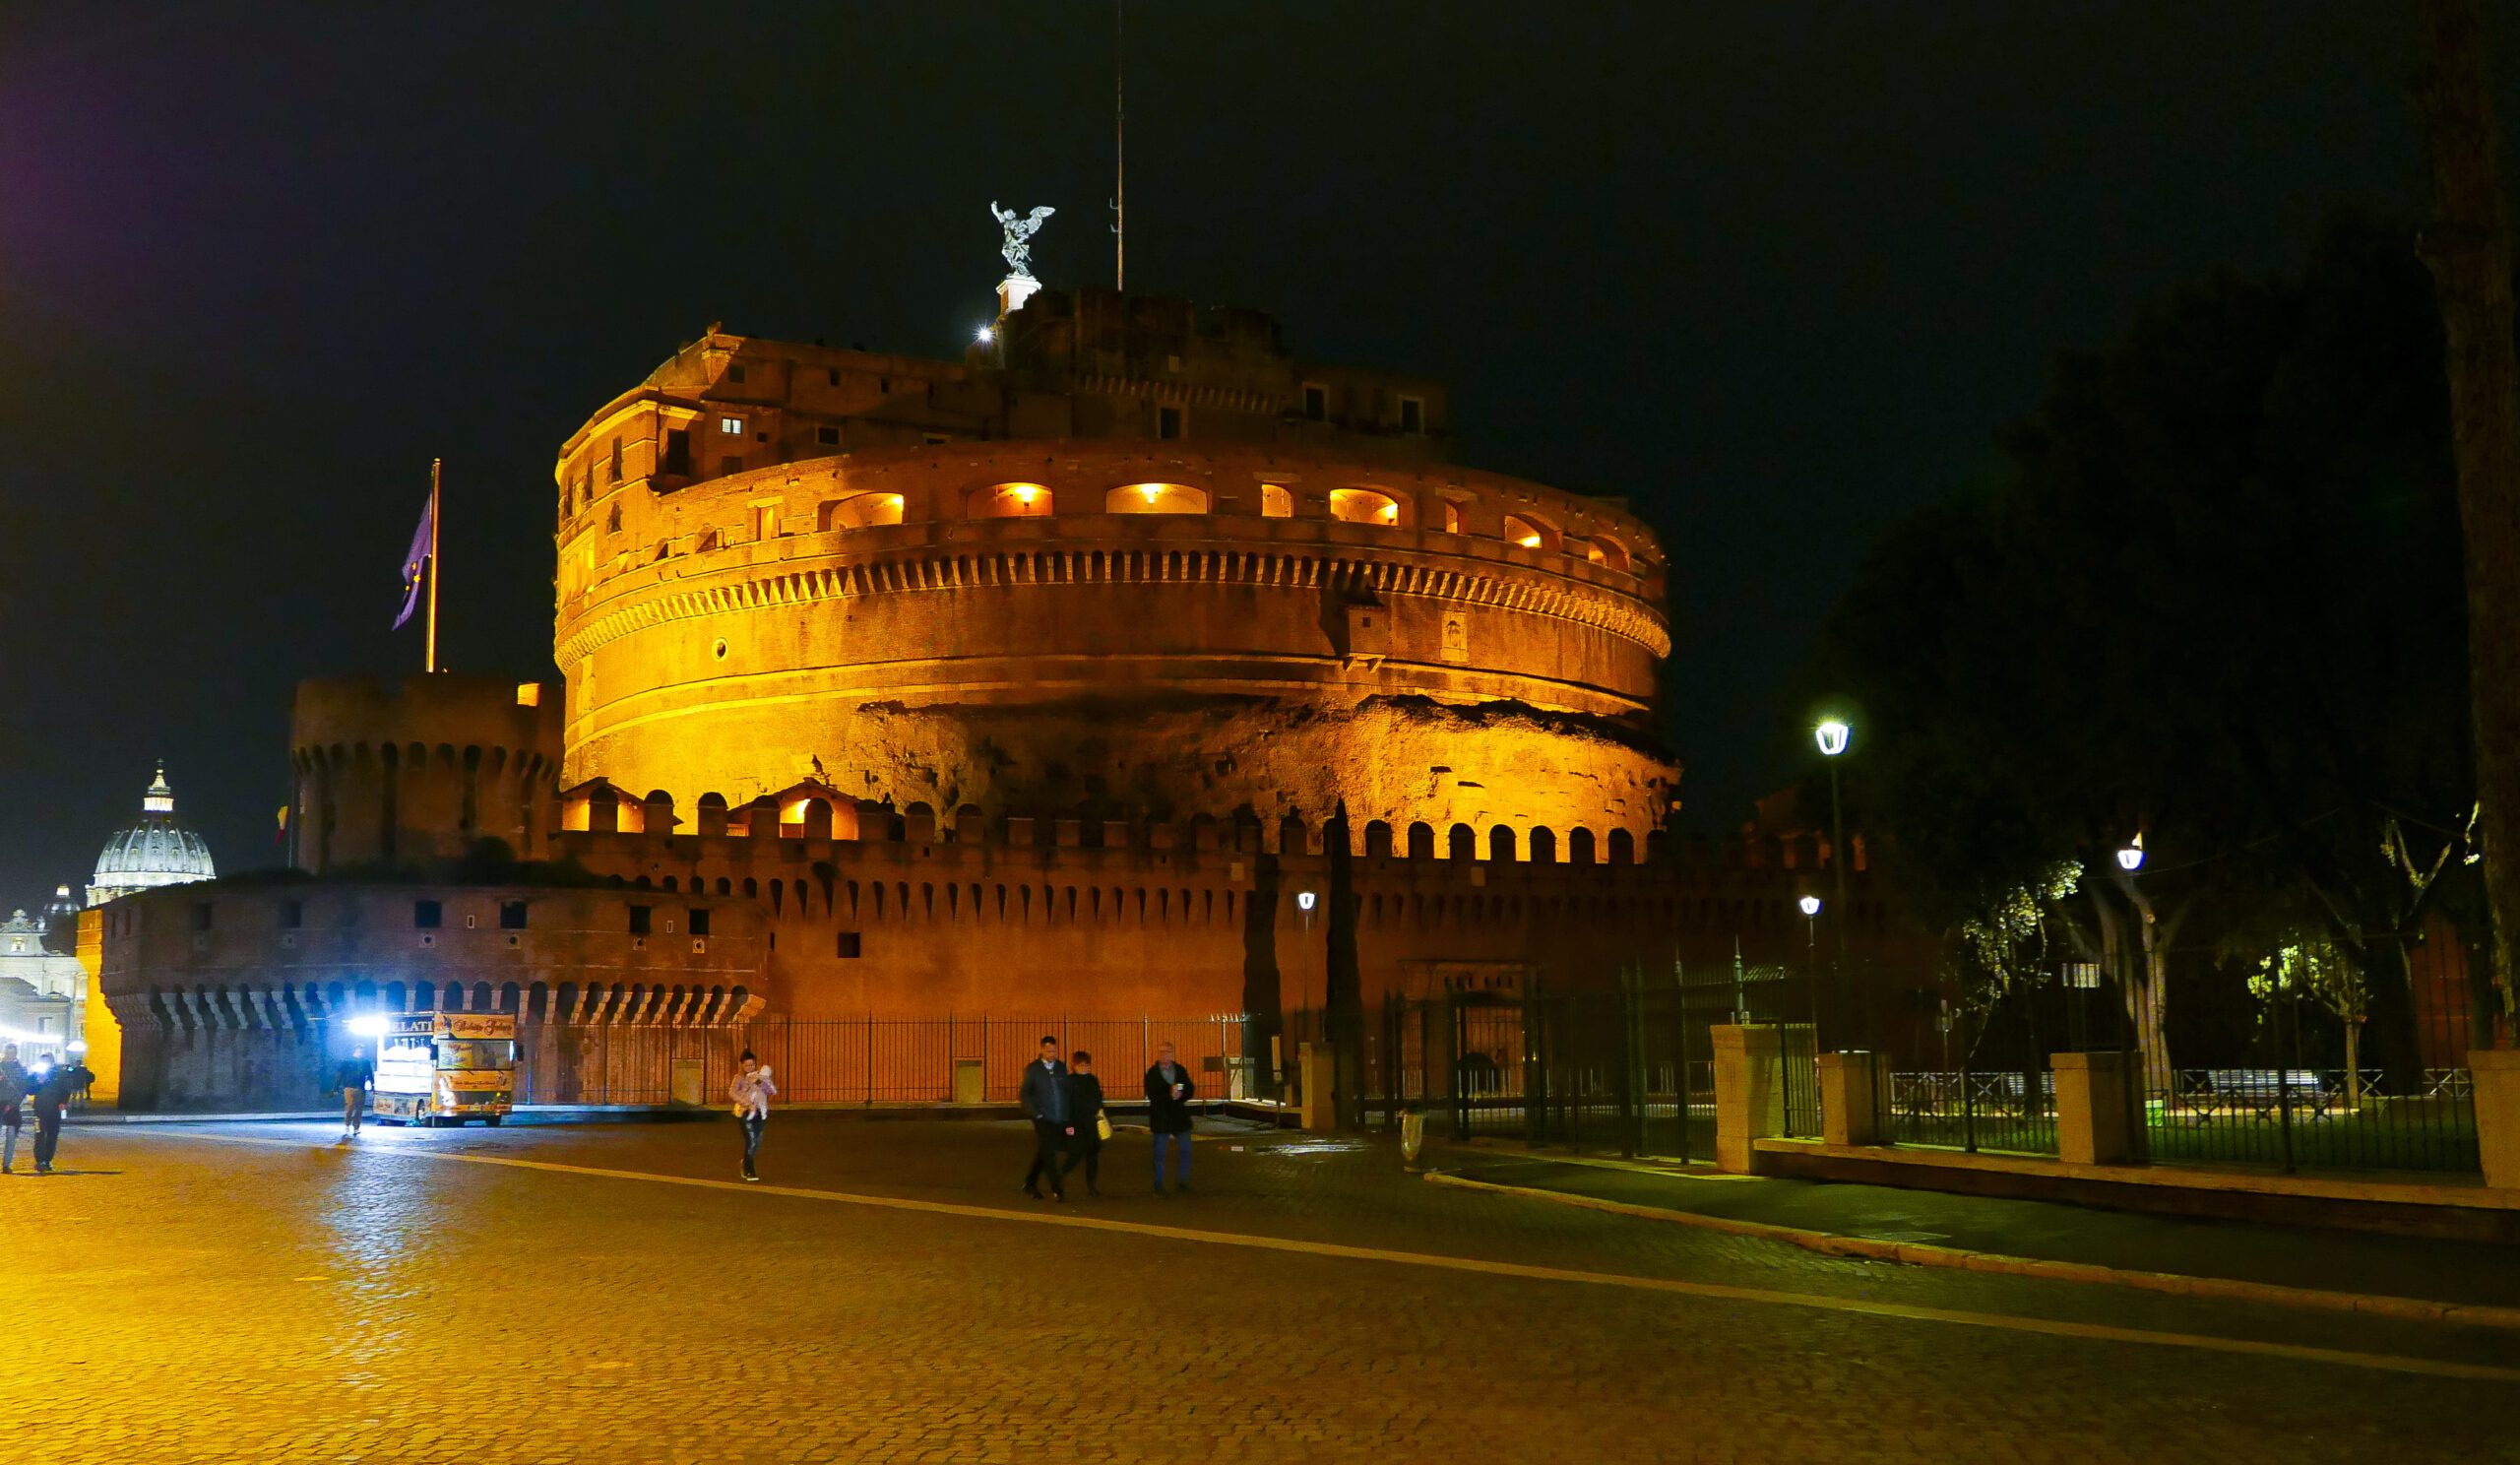 Fiat 500 Rome night tour experience